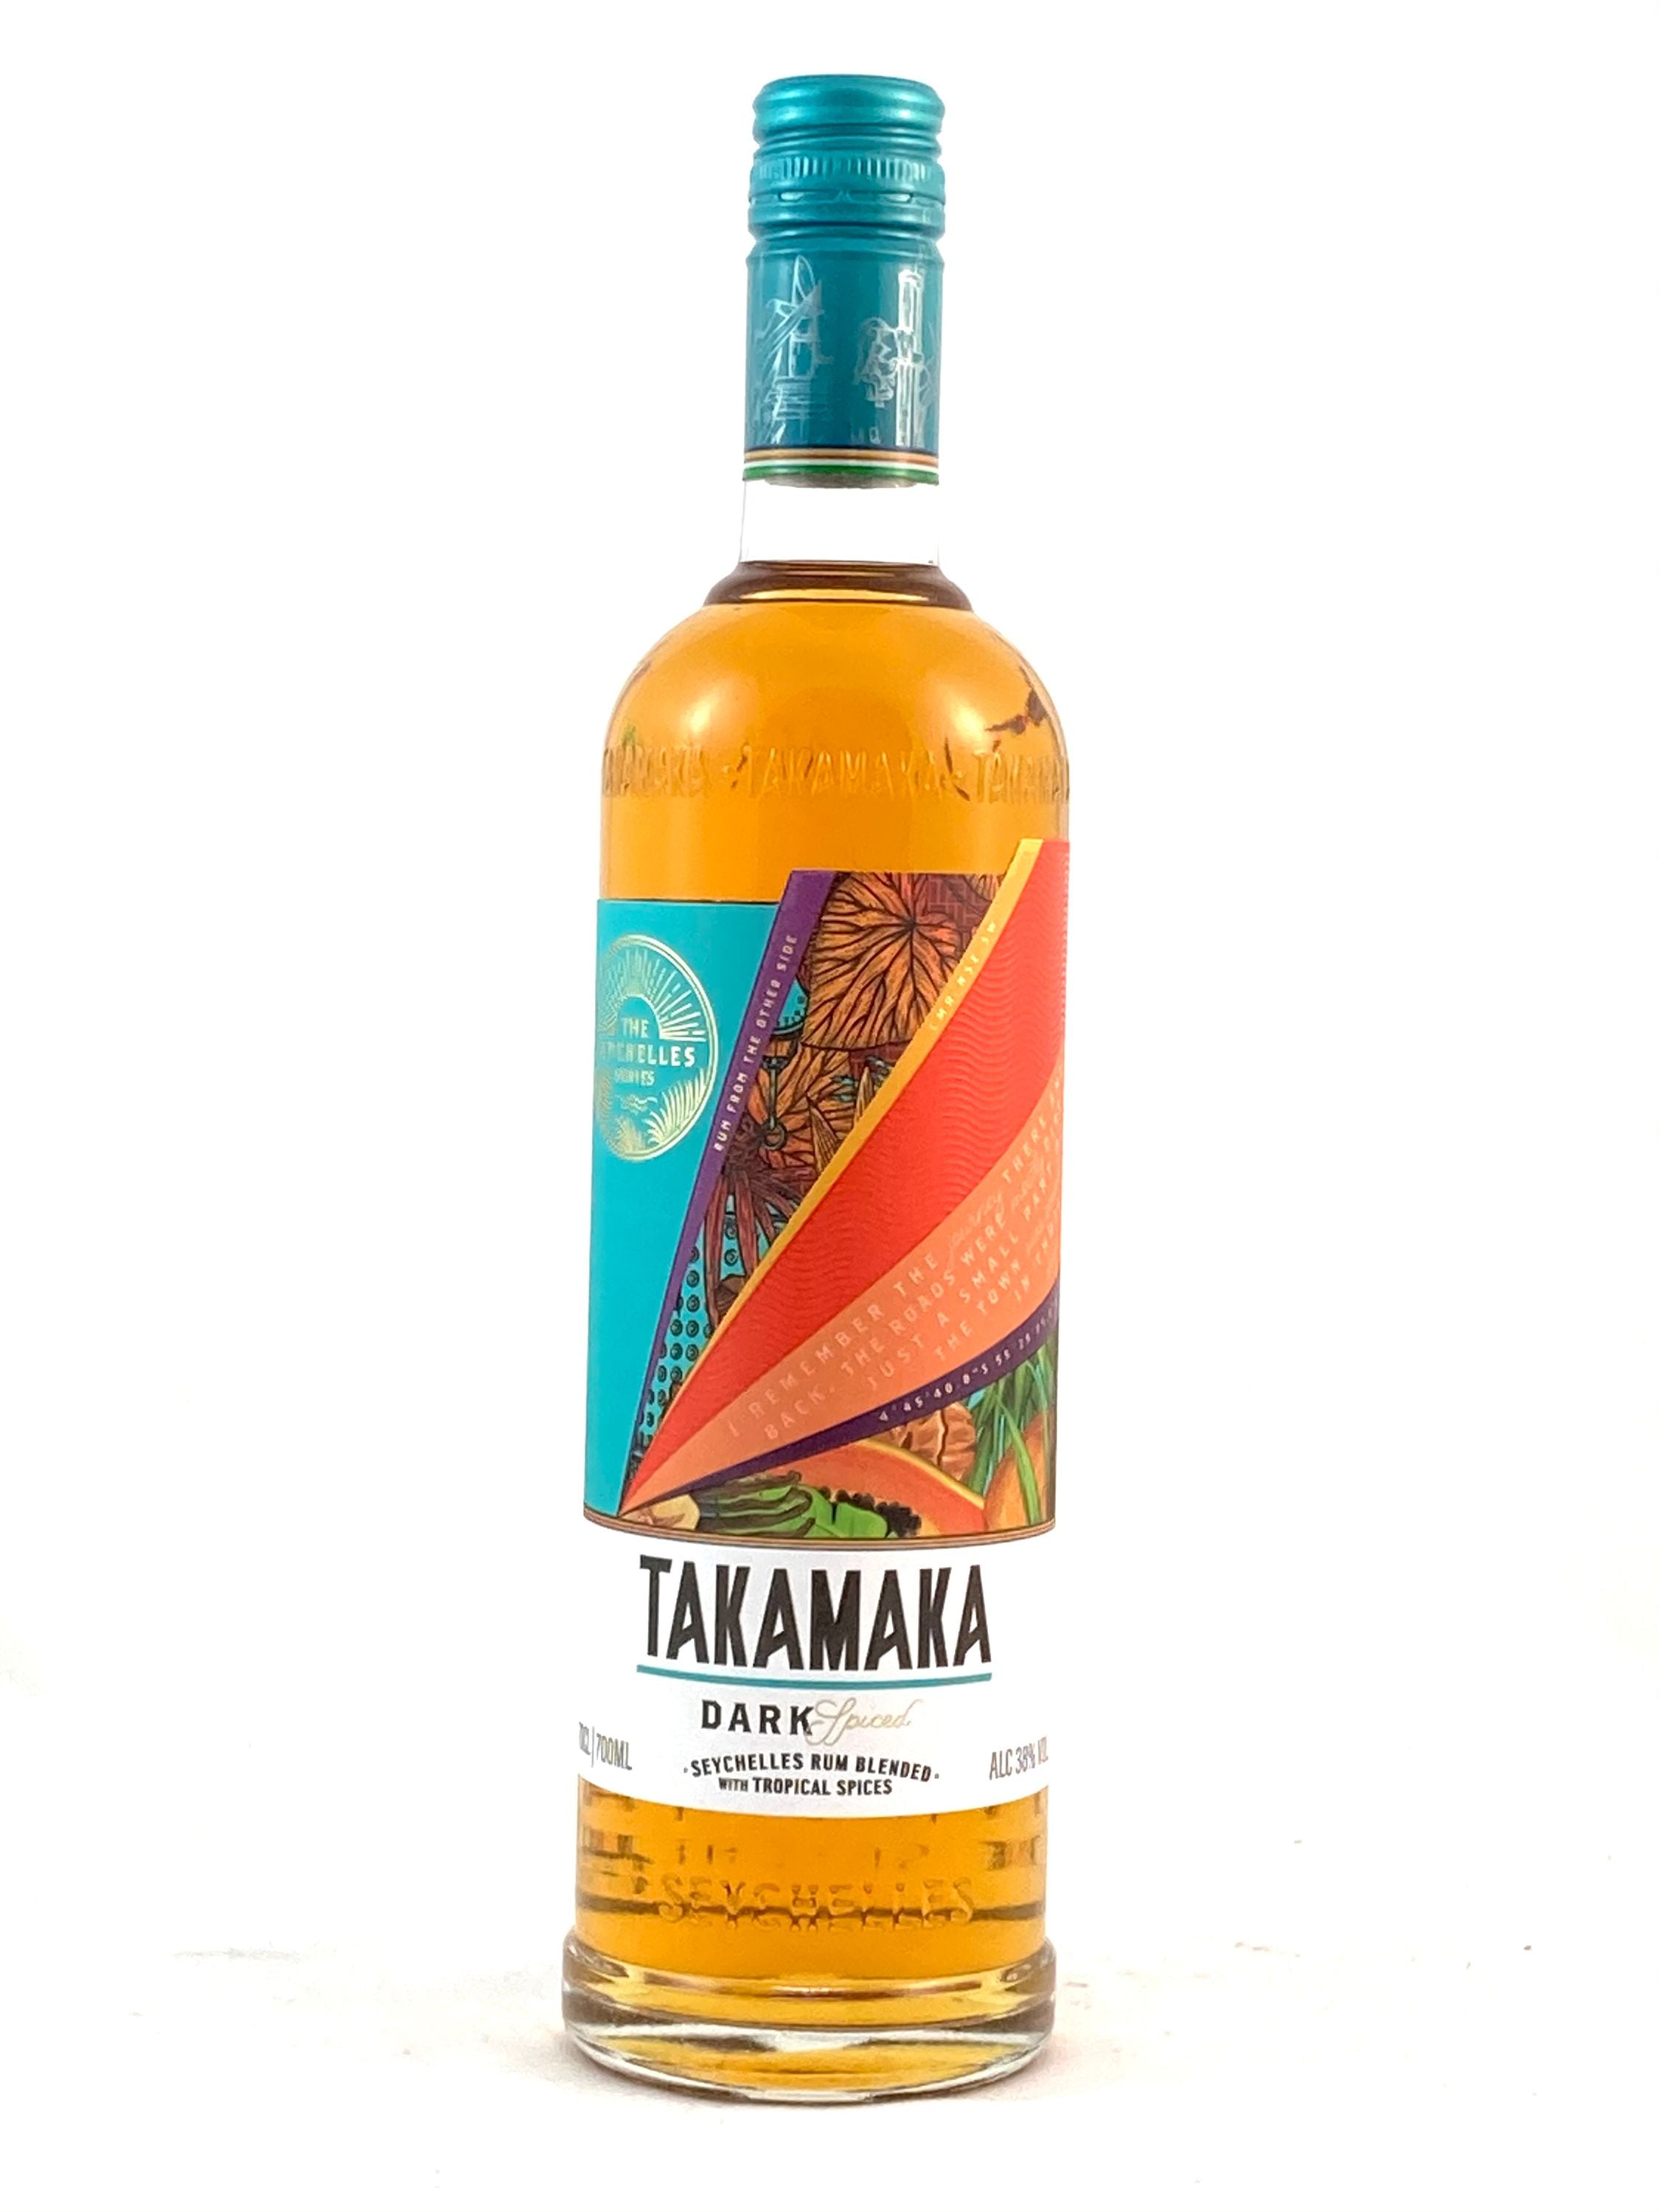 Takamaka Dark Spiced 0.7l, alc. 38% by volume, rum Seychelles